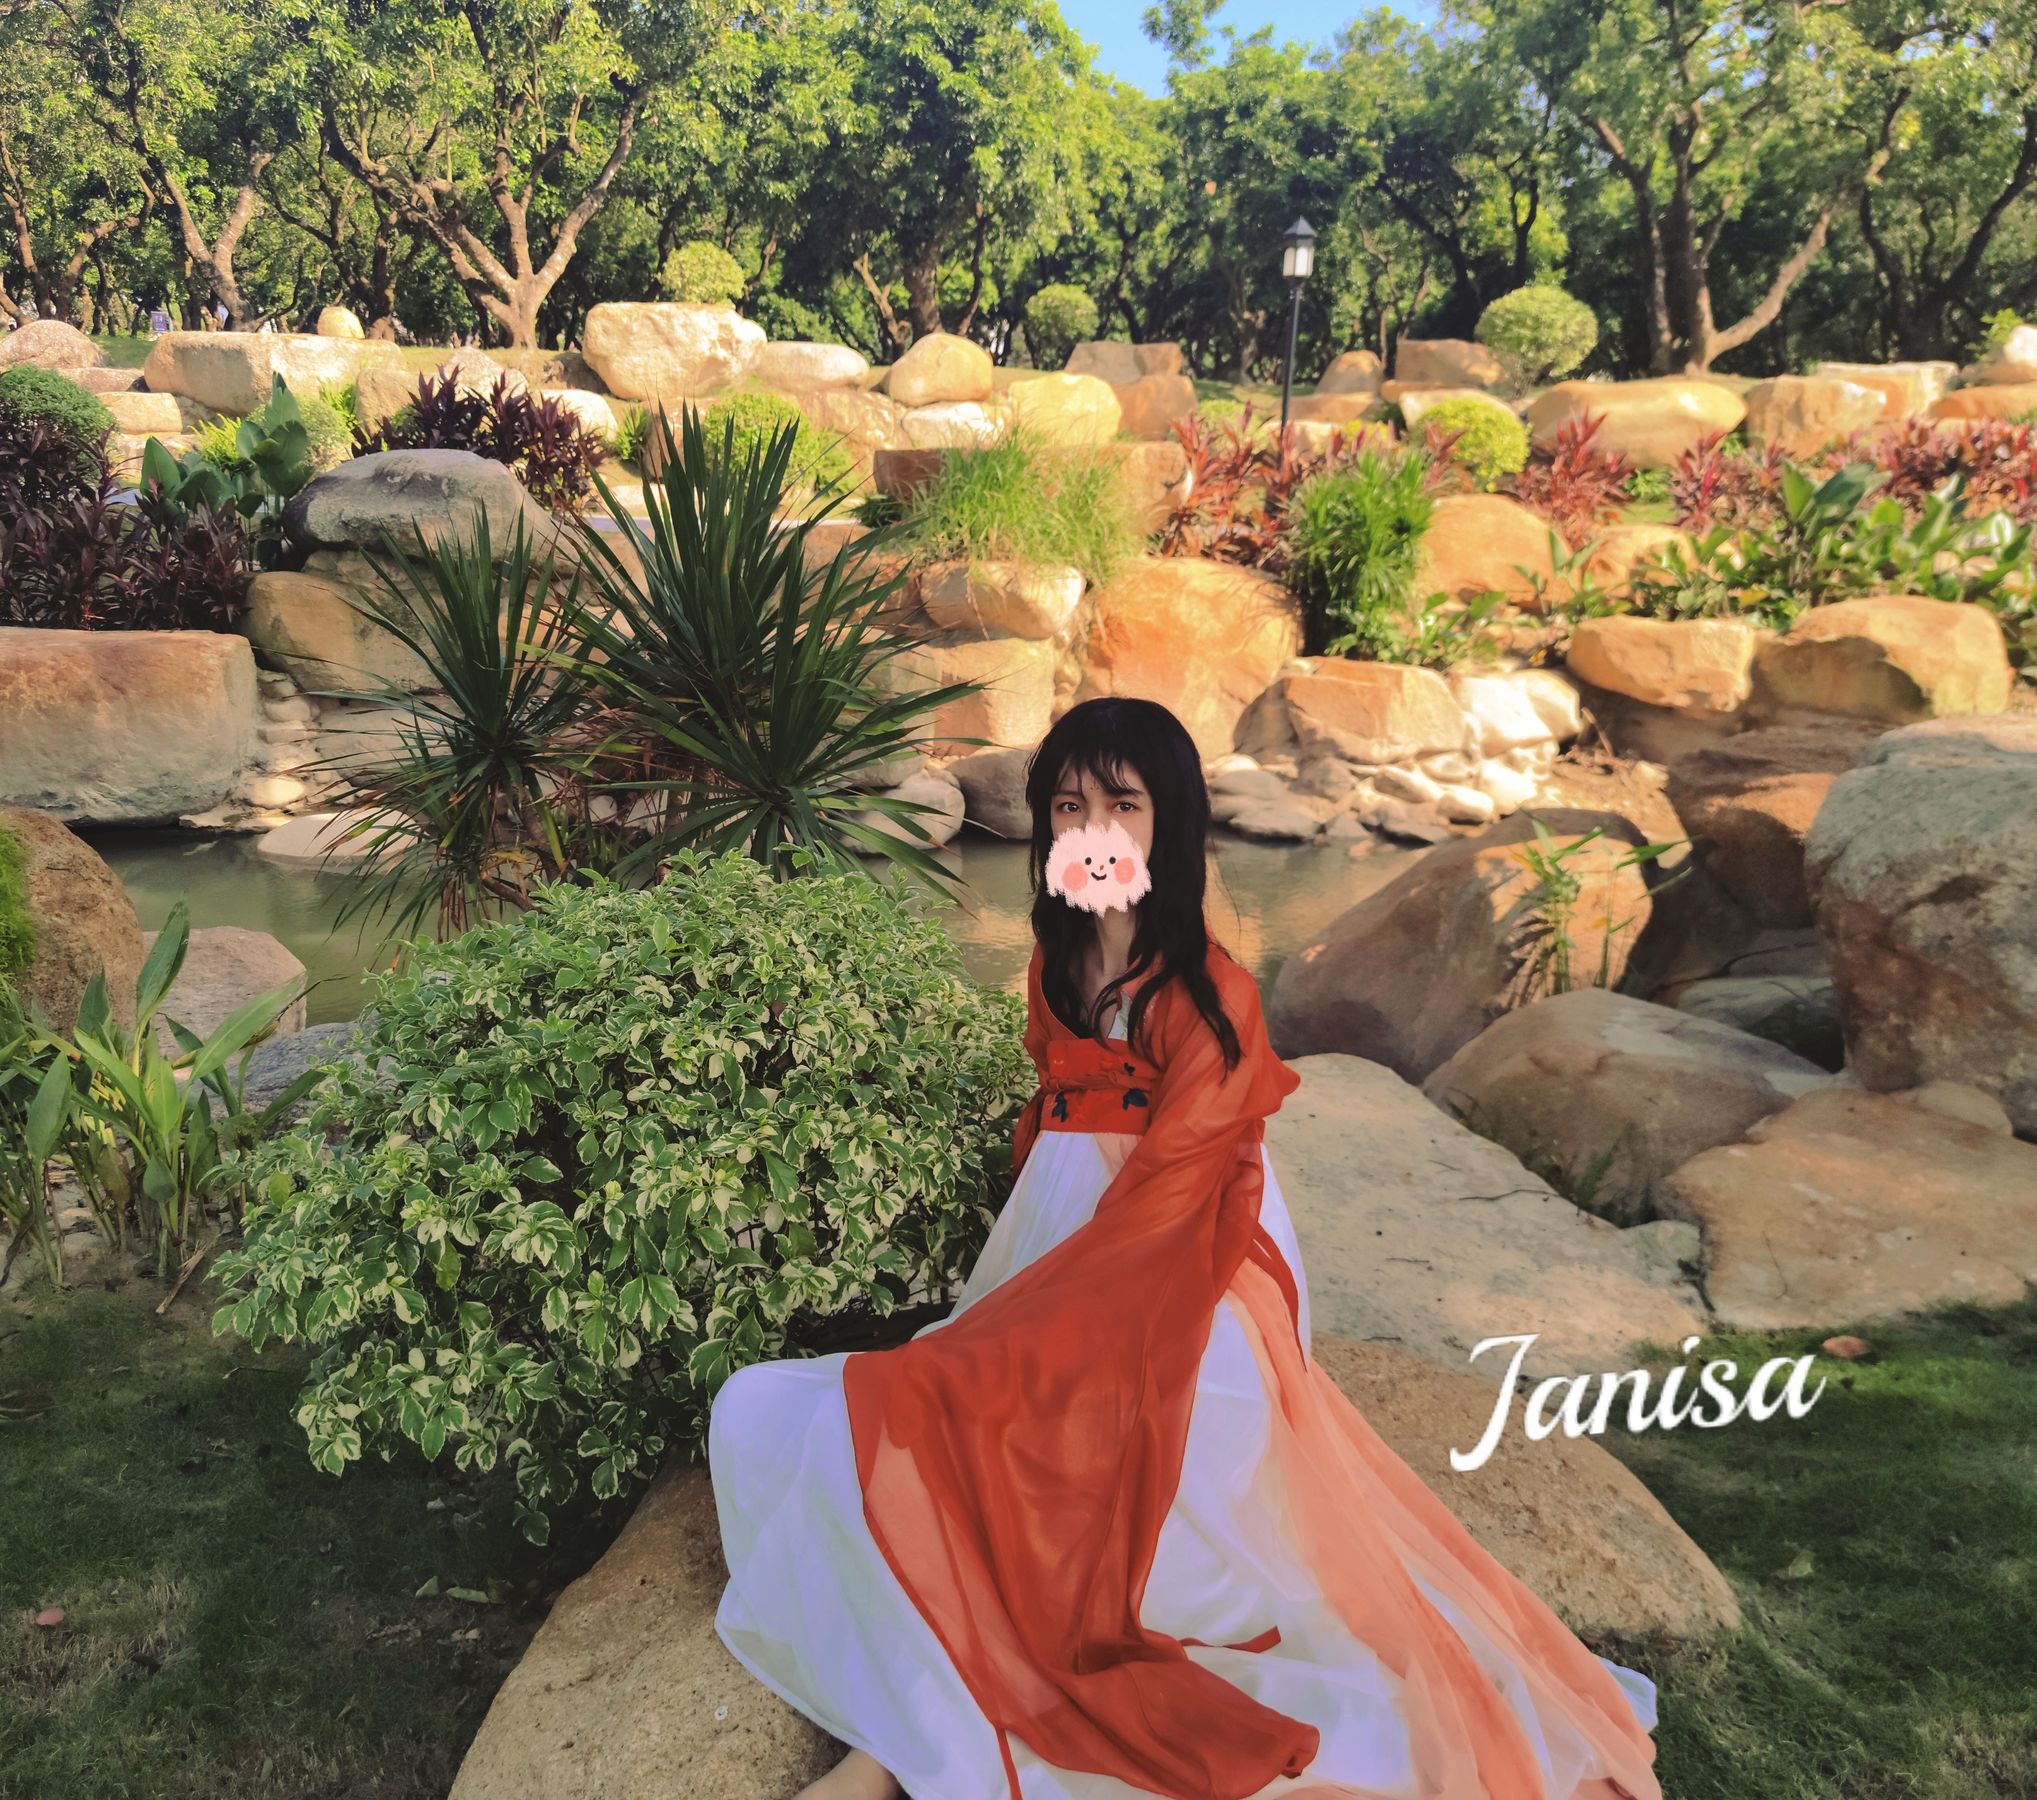 Janisa - 一花一世界 